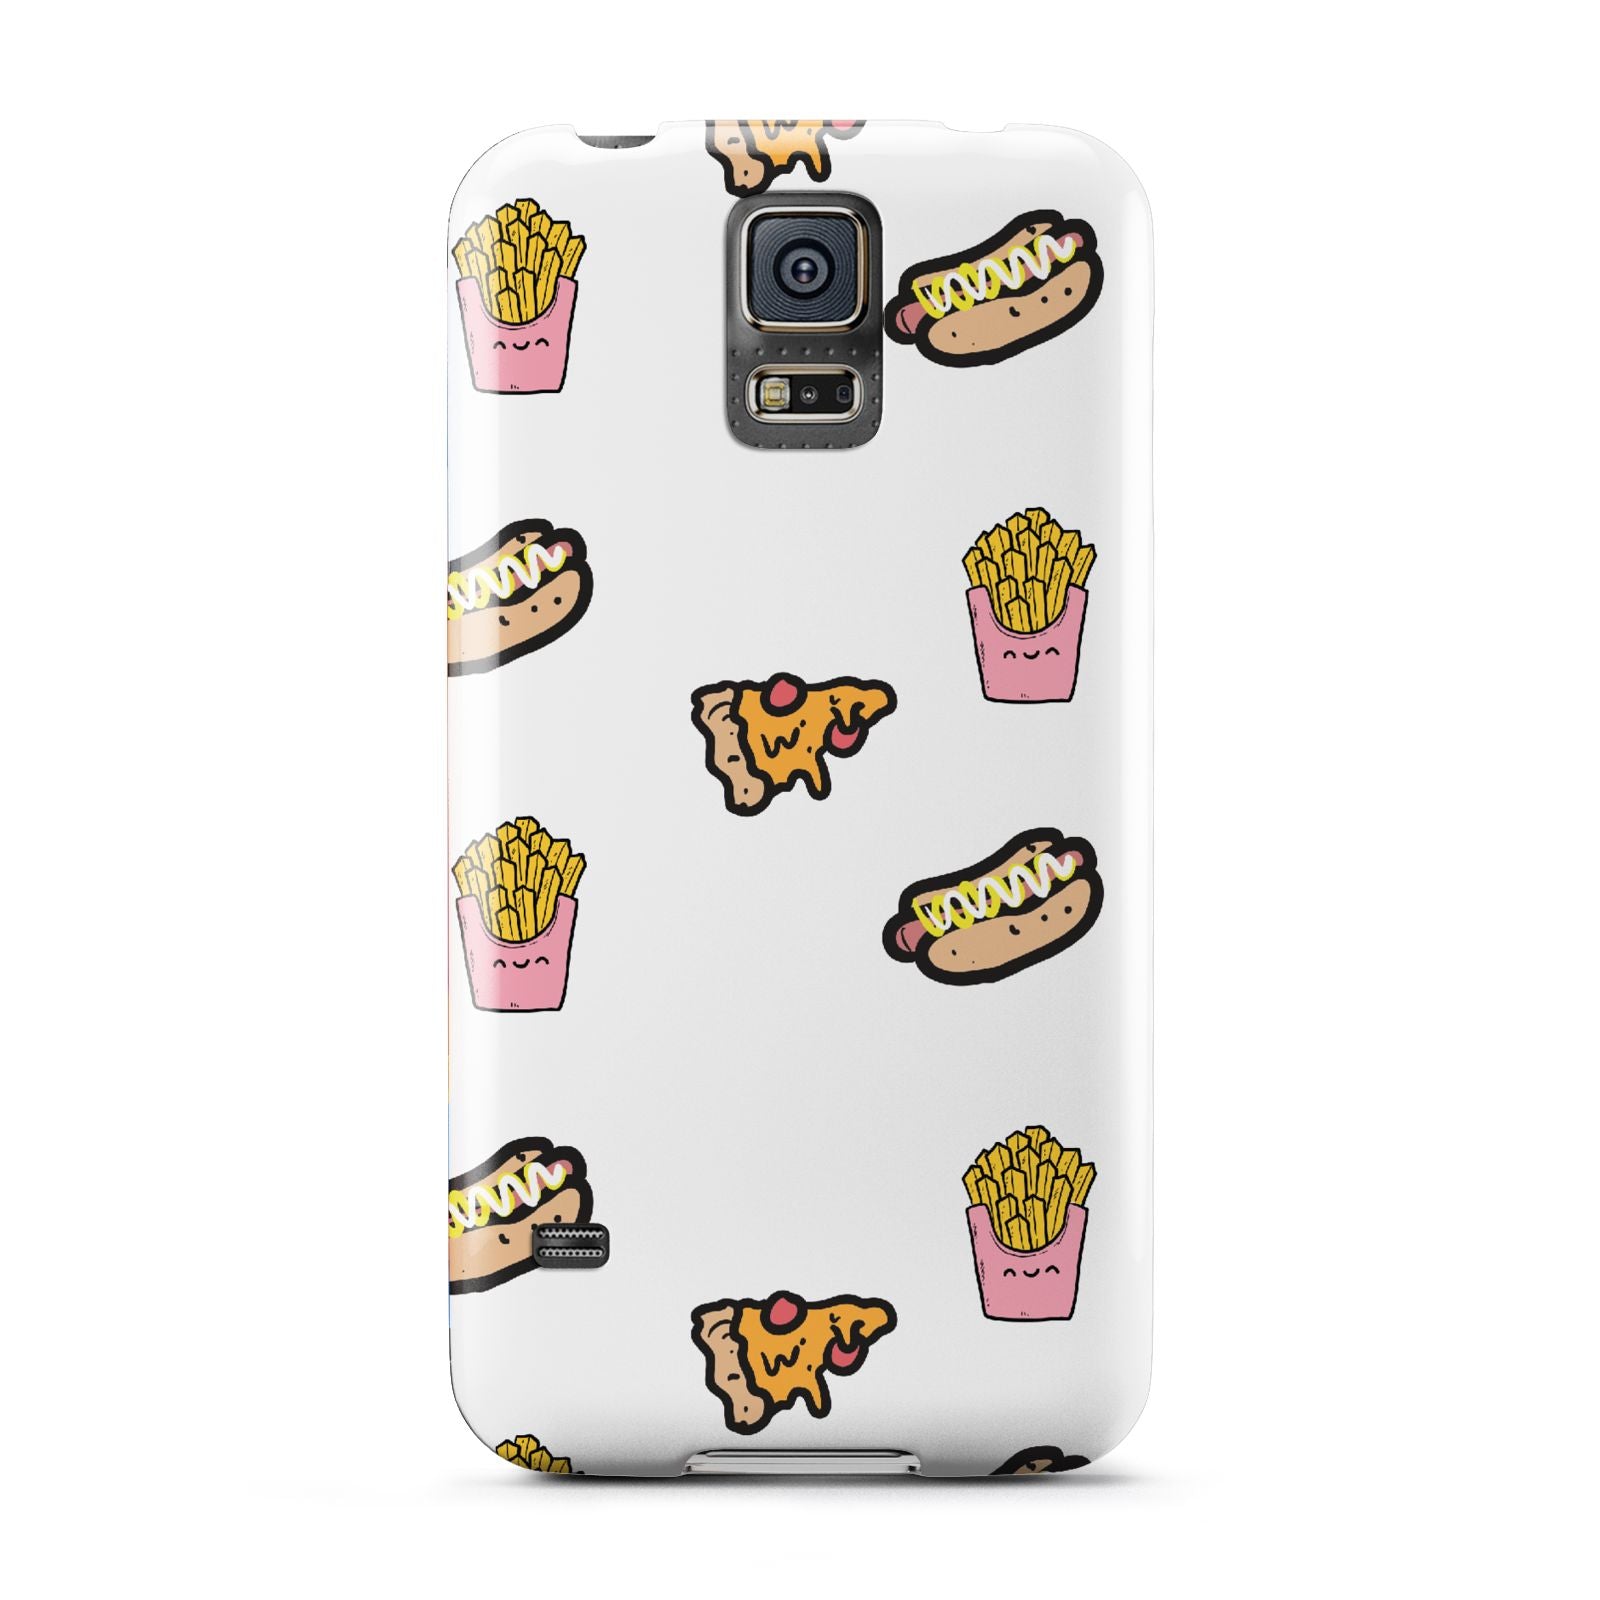 Fries Pizza Hot Dog Samsung Galaxy S5 Case